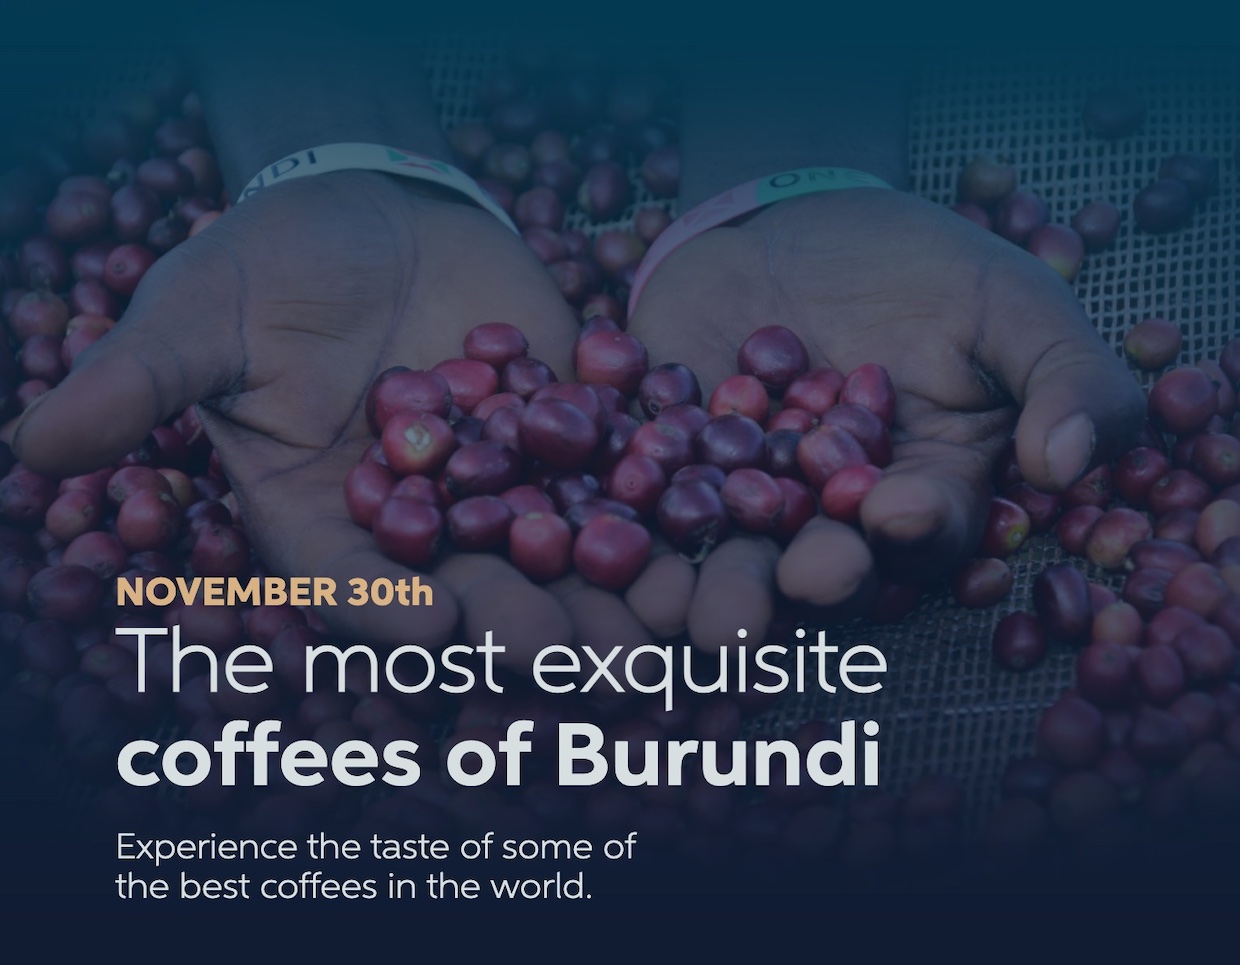 Grand Cru Burundi açık artırma